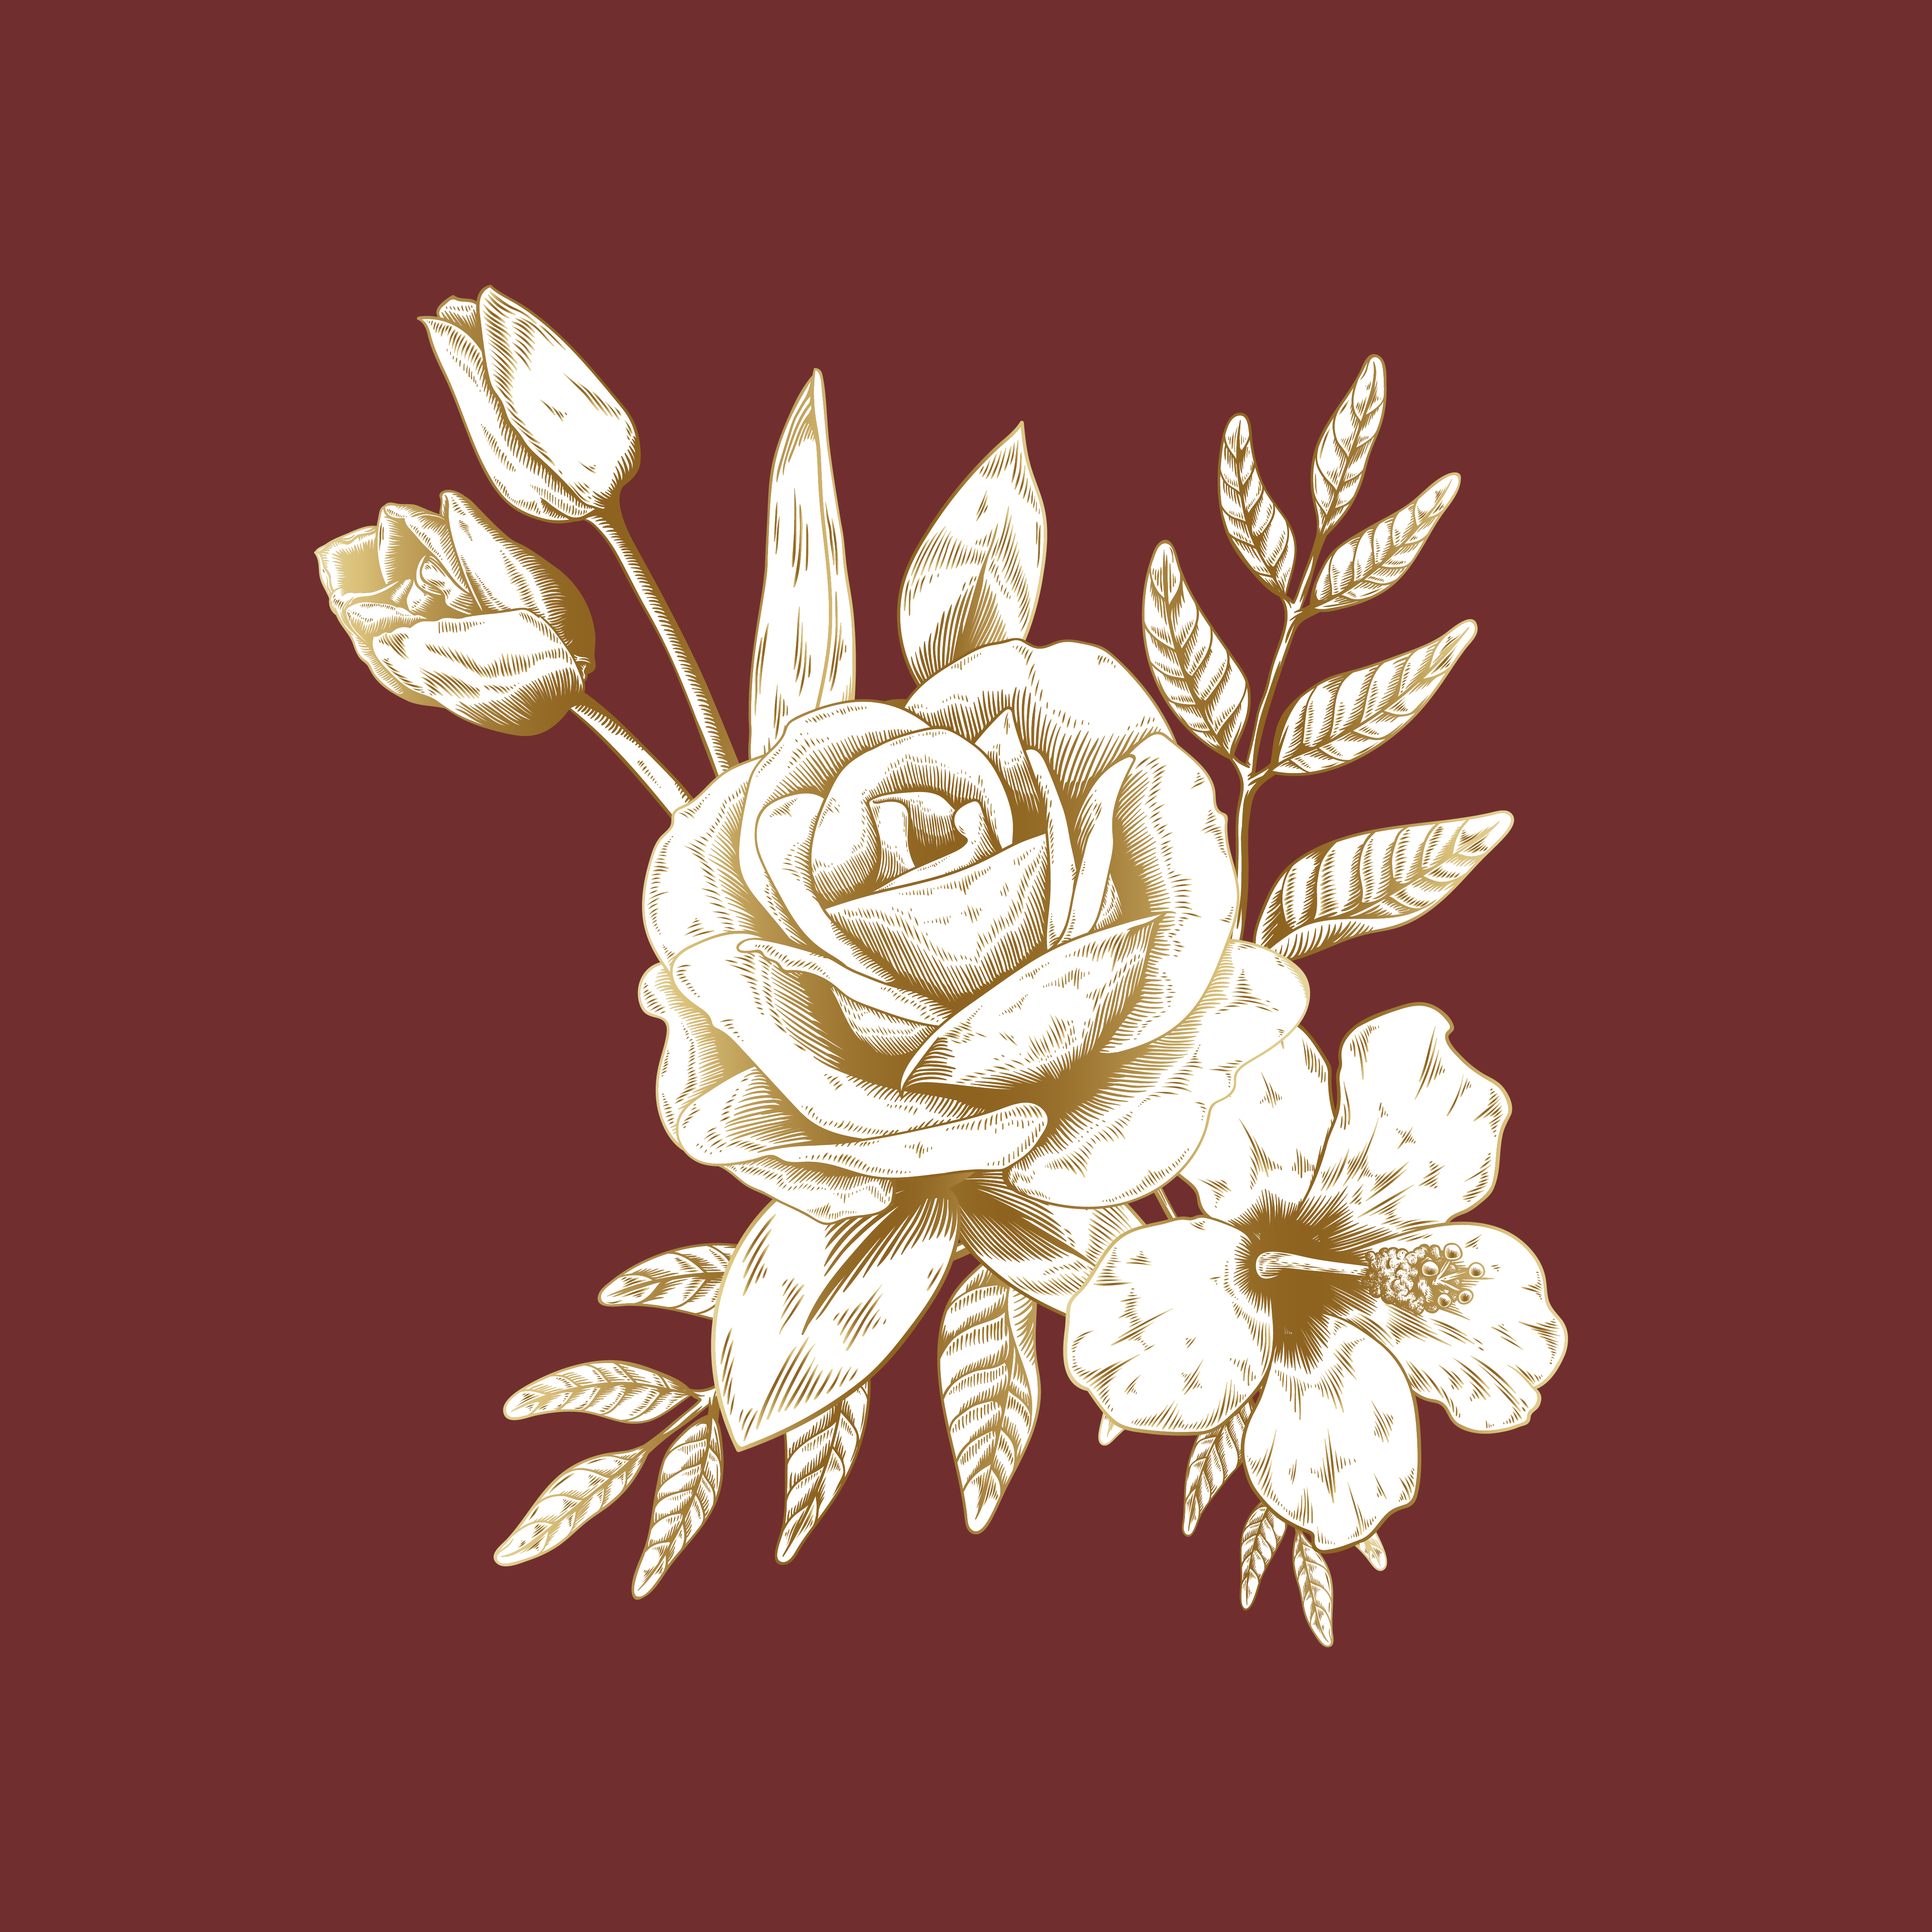 Vintage rose bouquet drawing - Download Free Vectors, Clipart Graphics